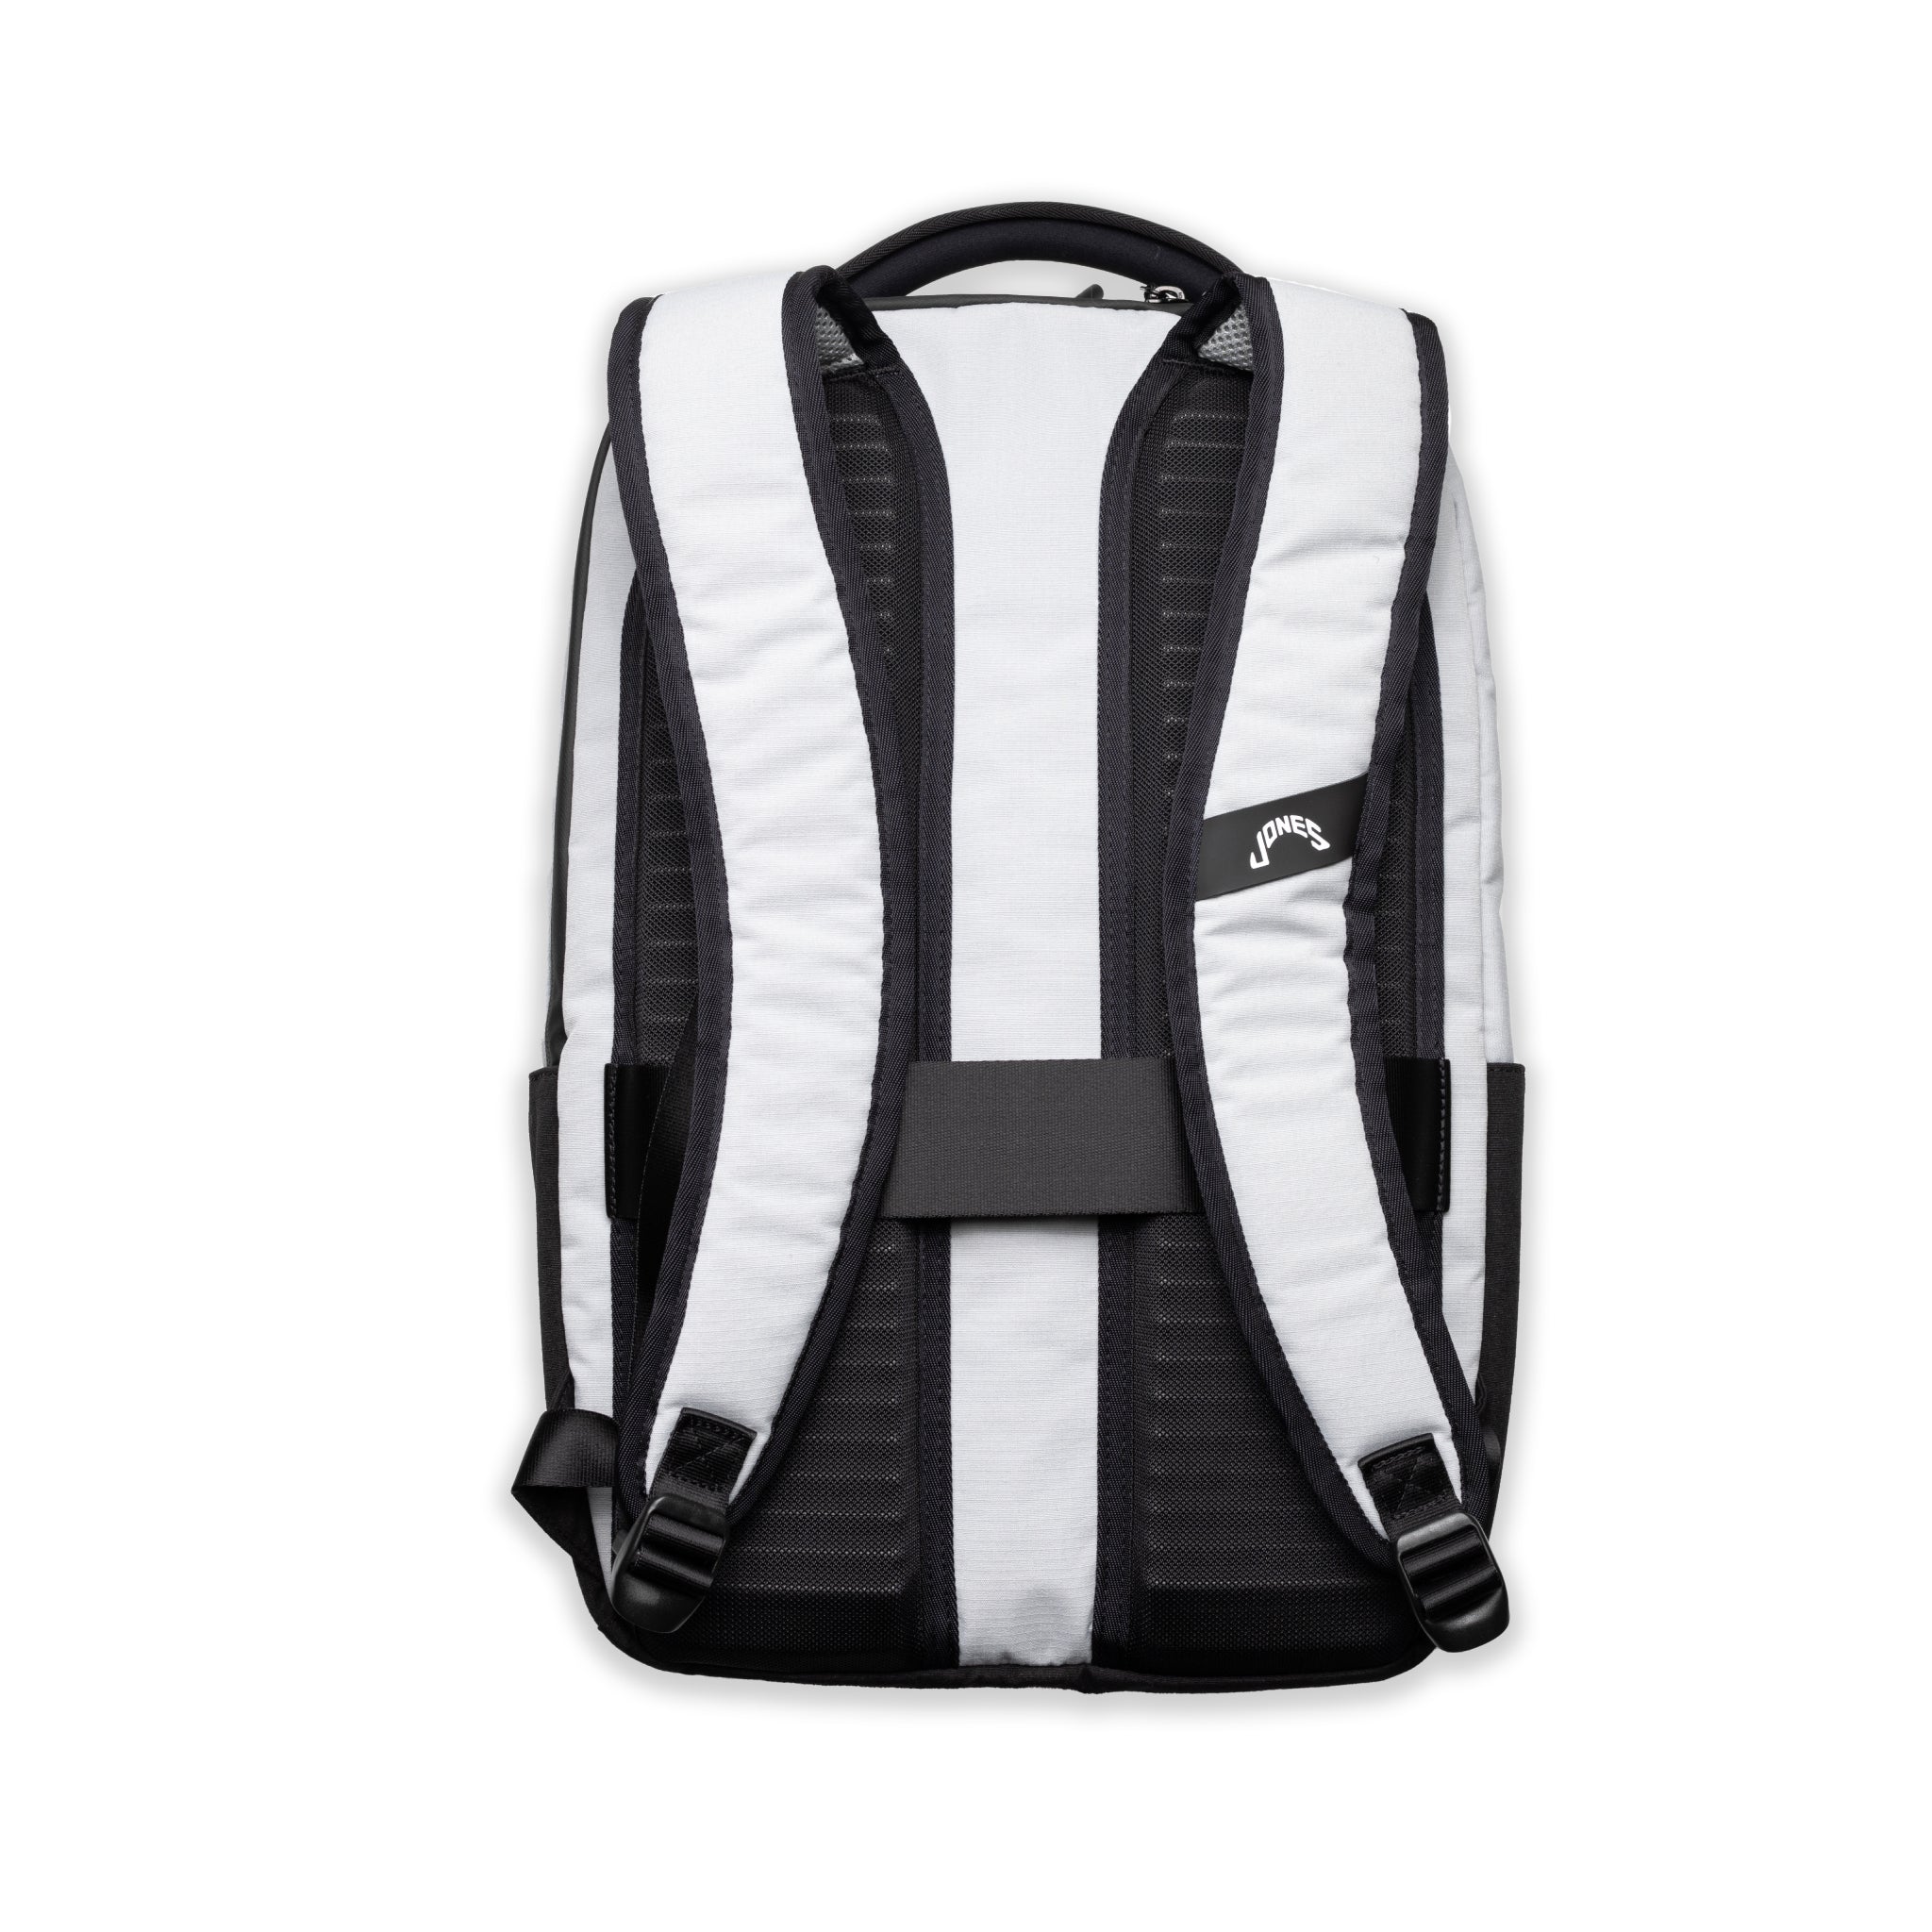 Jones Sports Co. A2 Backpack - Moon Gray/Black